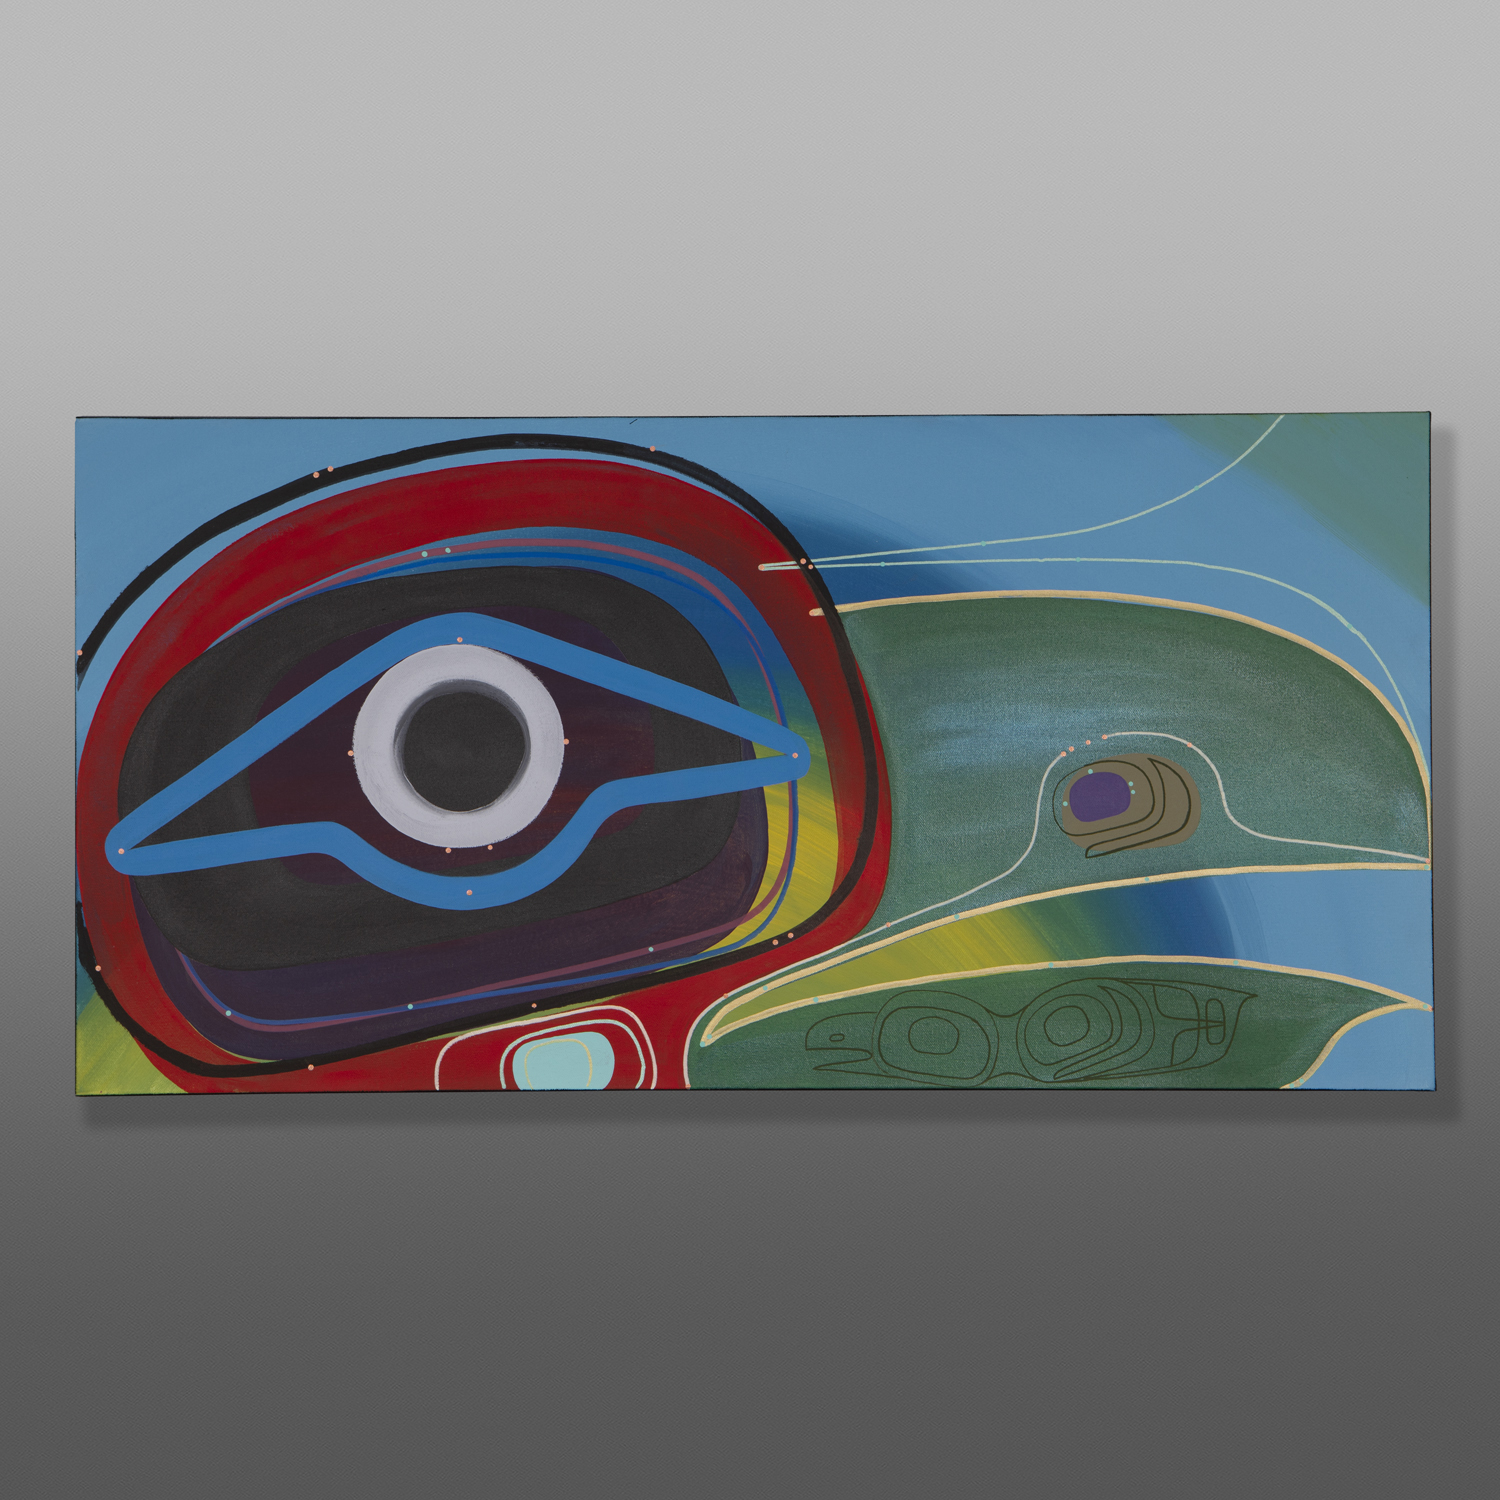 Origin (Raven I)
Steve Smith – Dla-kwagila
Oweeneno
18”x36”
Acrylic on canvas
$3200
